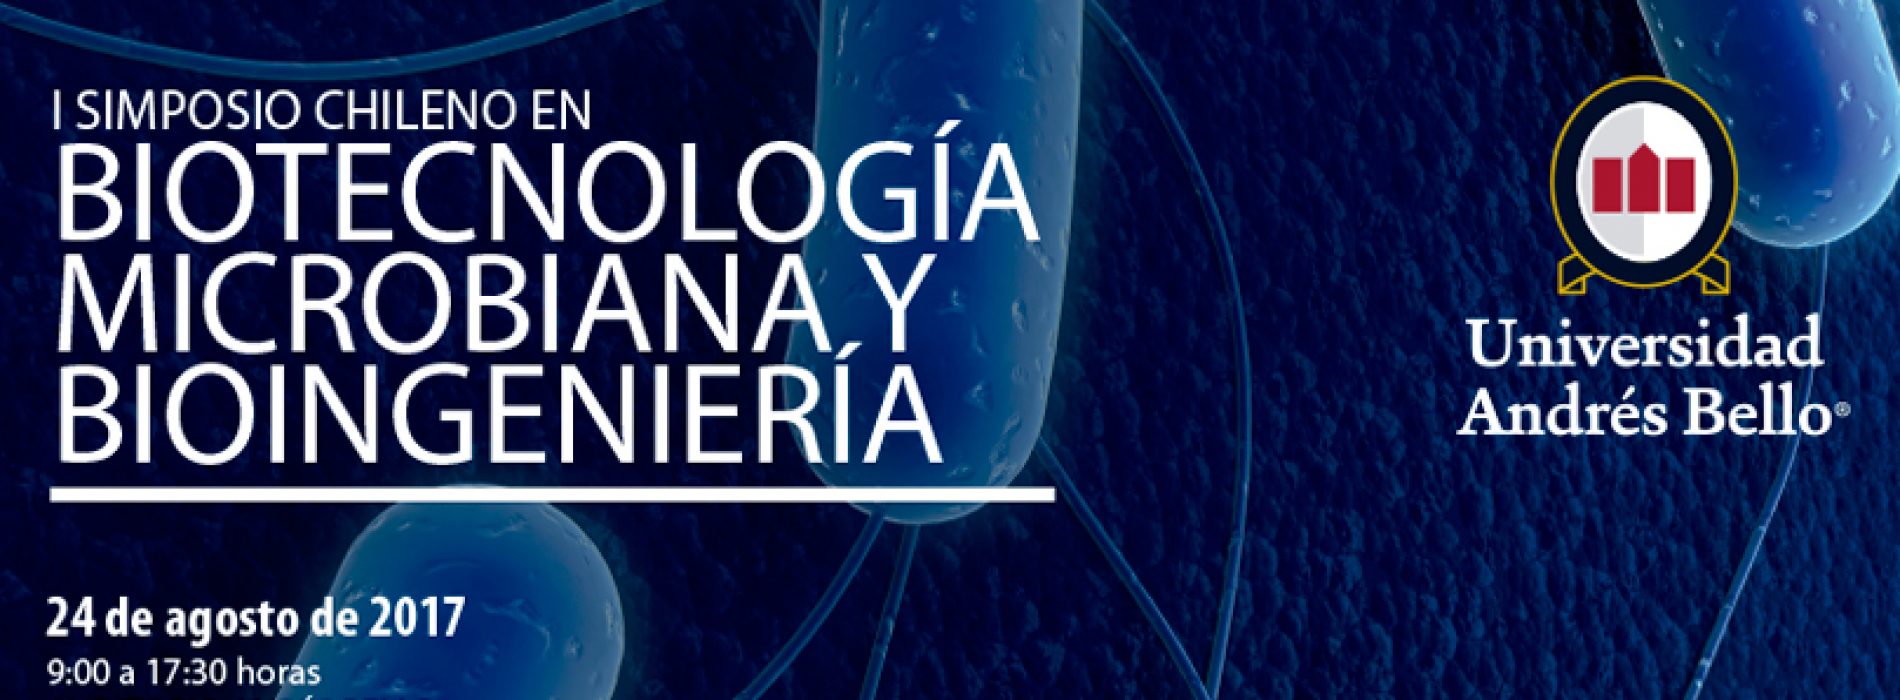 I Chilean Symposium on biotechnology and bioengineering, Microbiana